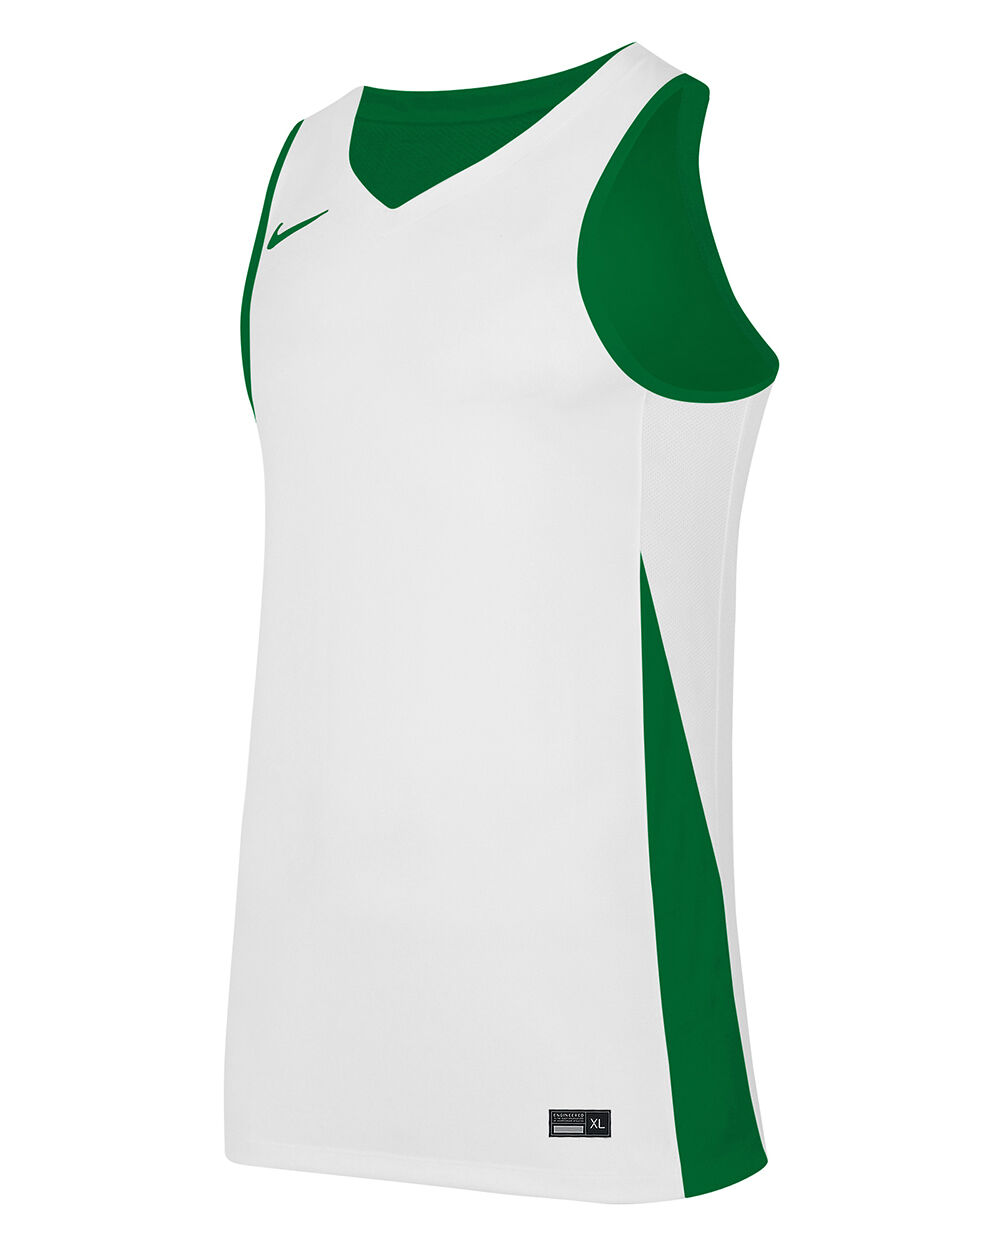 Camiseta de baloncesto reversible Nike Team Verde y Blanco Niño - NT0204-302